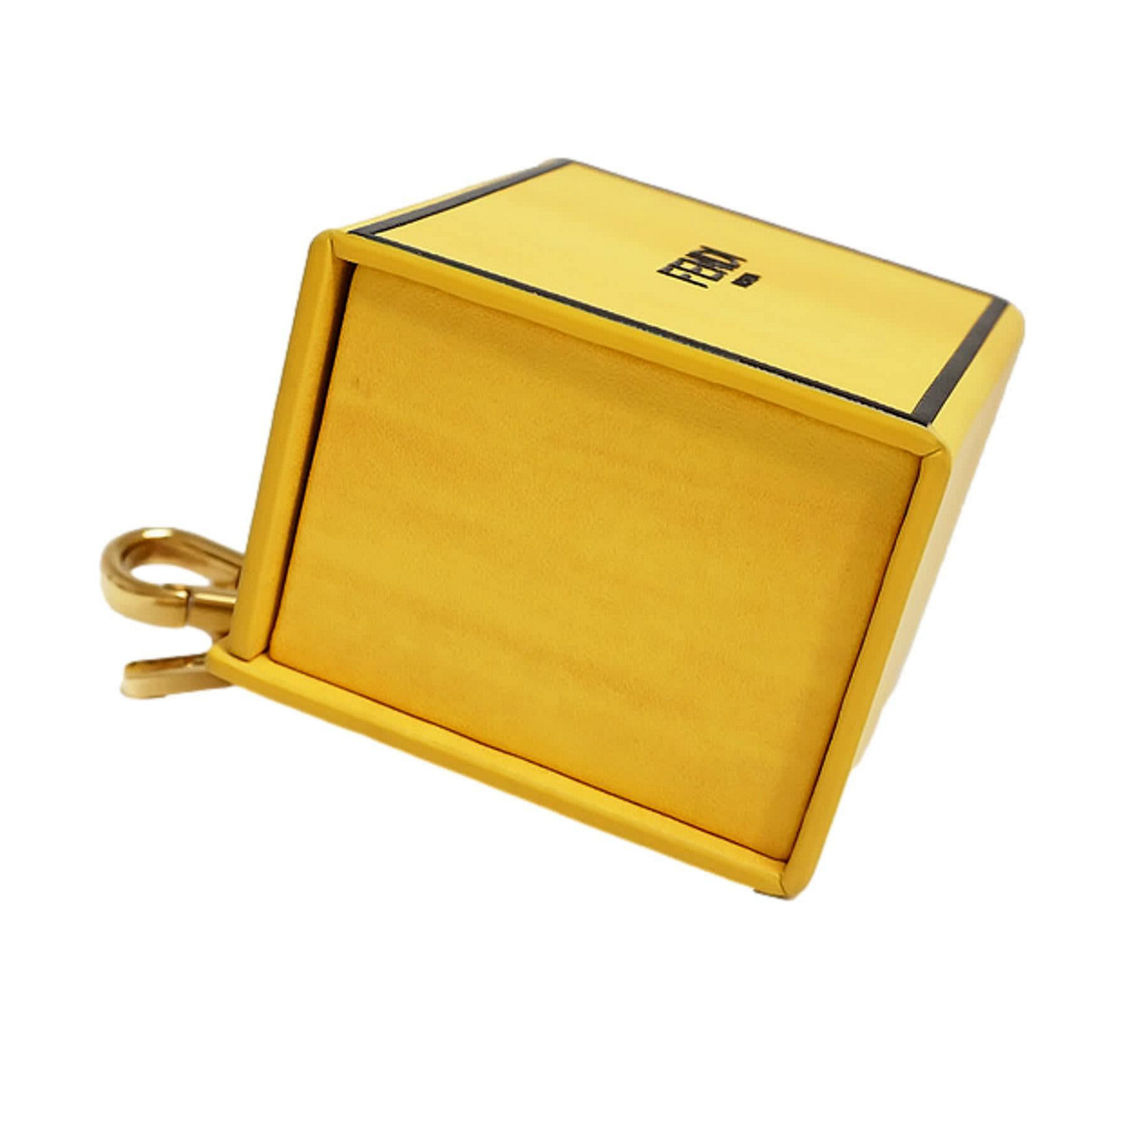 Fendi Roma Mini Box Yellow Leather Key Ring Charm (New) - Image 3 of 5